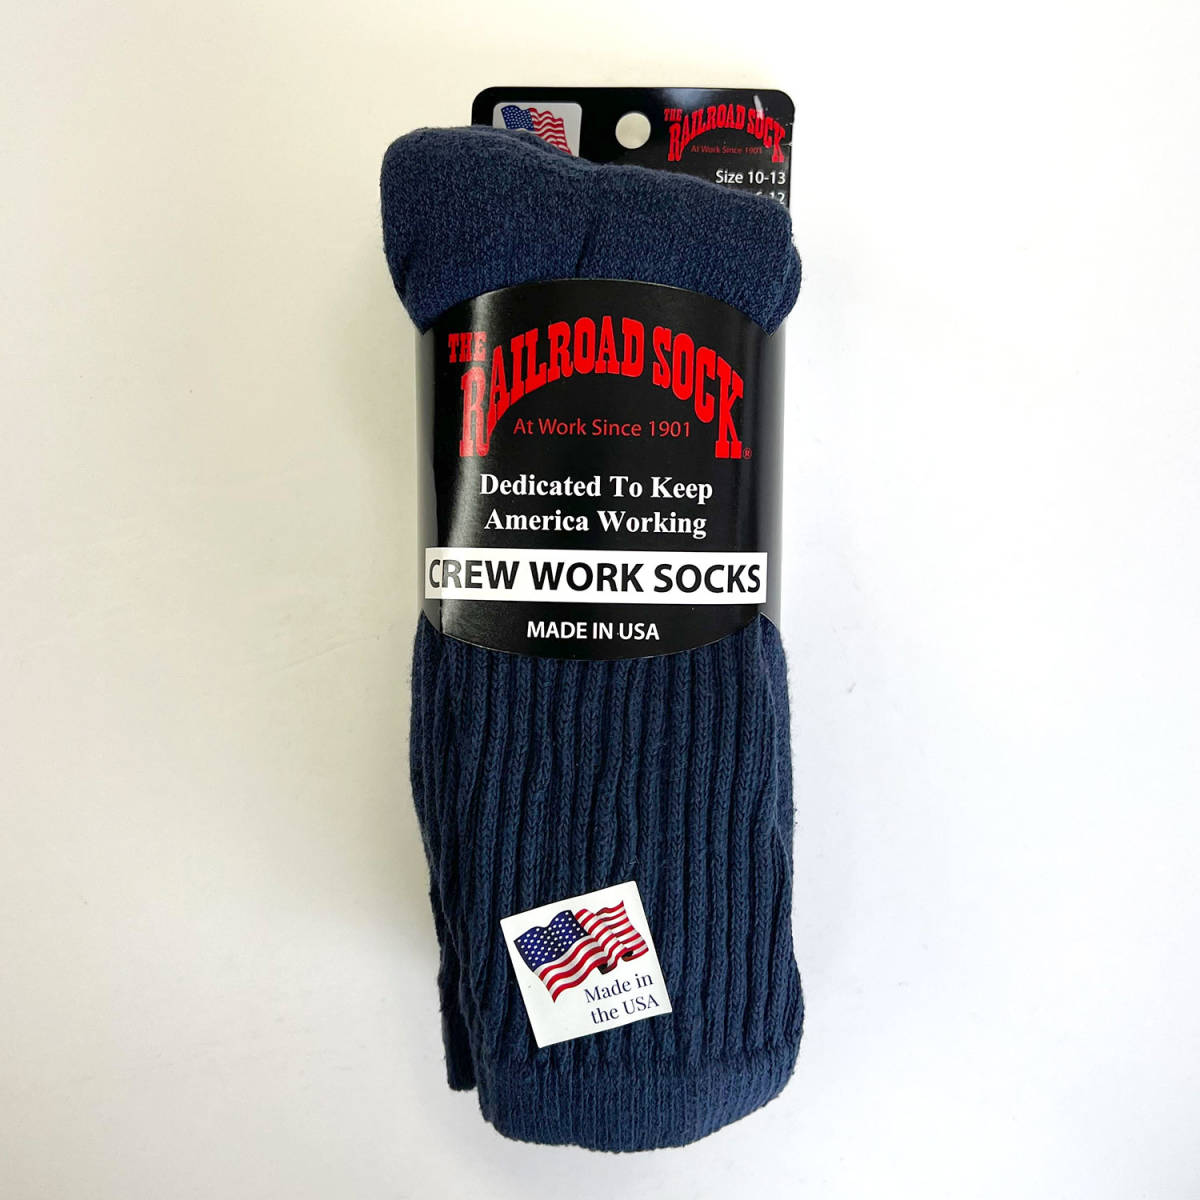 RAILROAD SOCK Laile load sok носки 3 пар комплект темно-синий CREW WORK SOCKS носки MADE IN USA America производства 